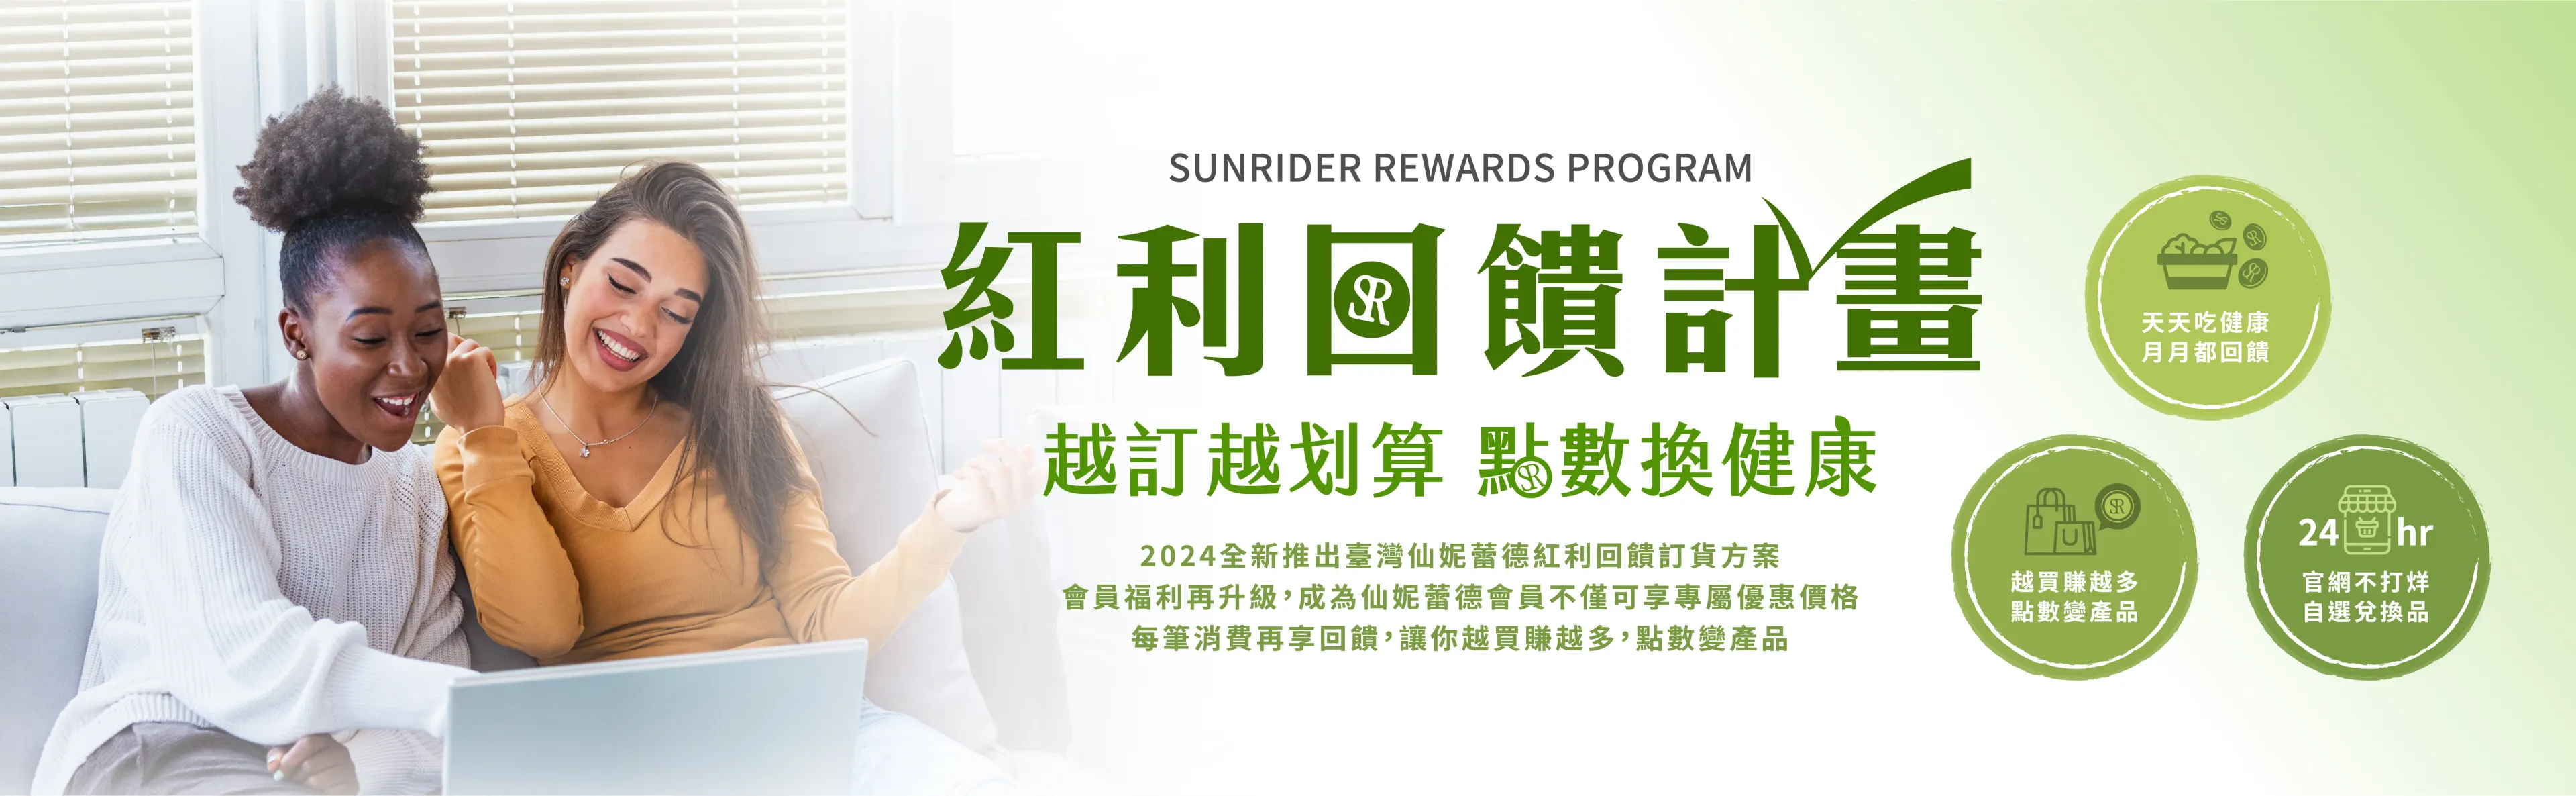 TW-sunrider rewards program